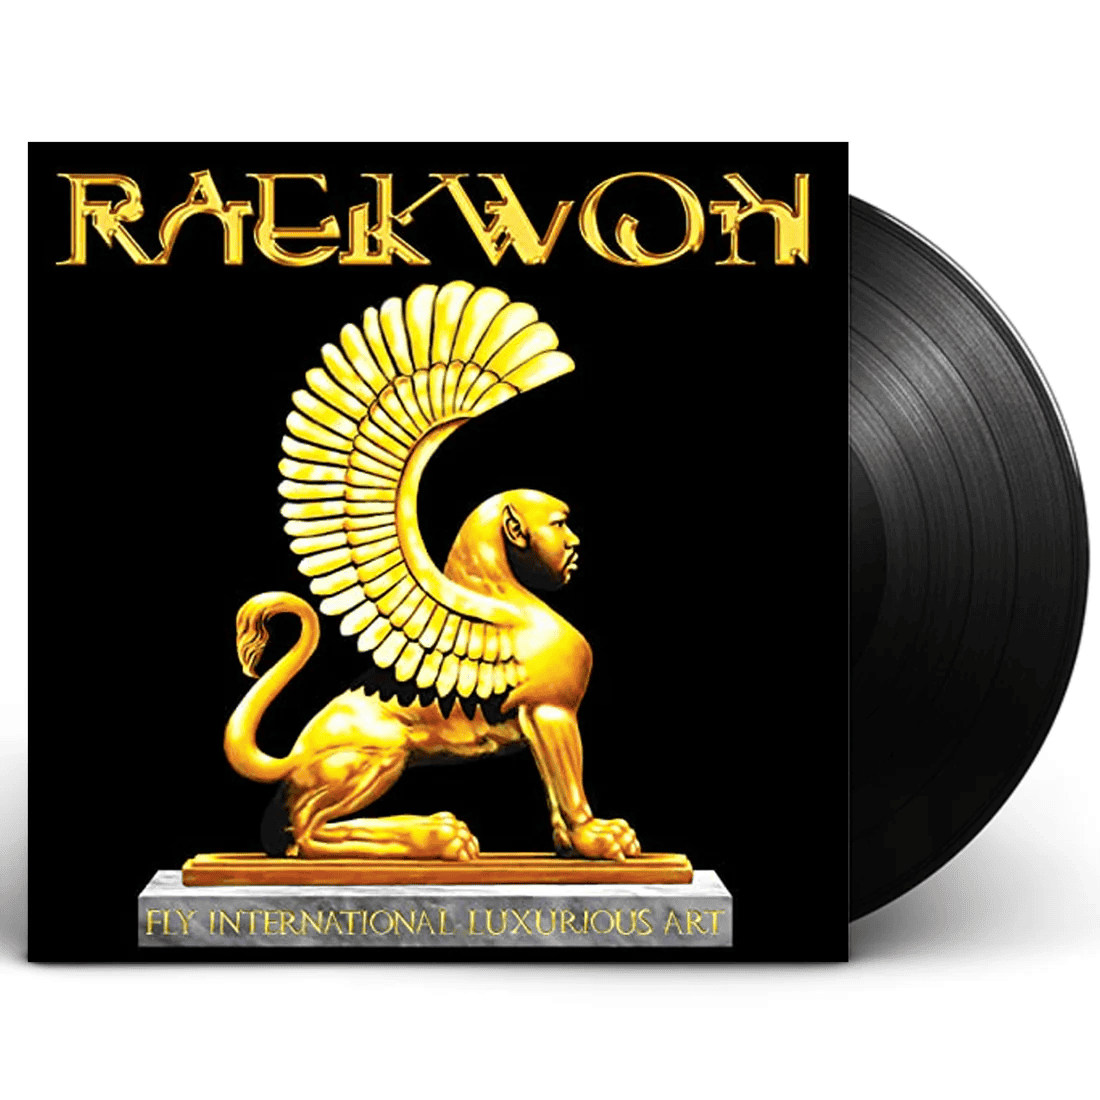 RAEKWON - Fly International Luxurious Art Vinyl